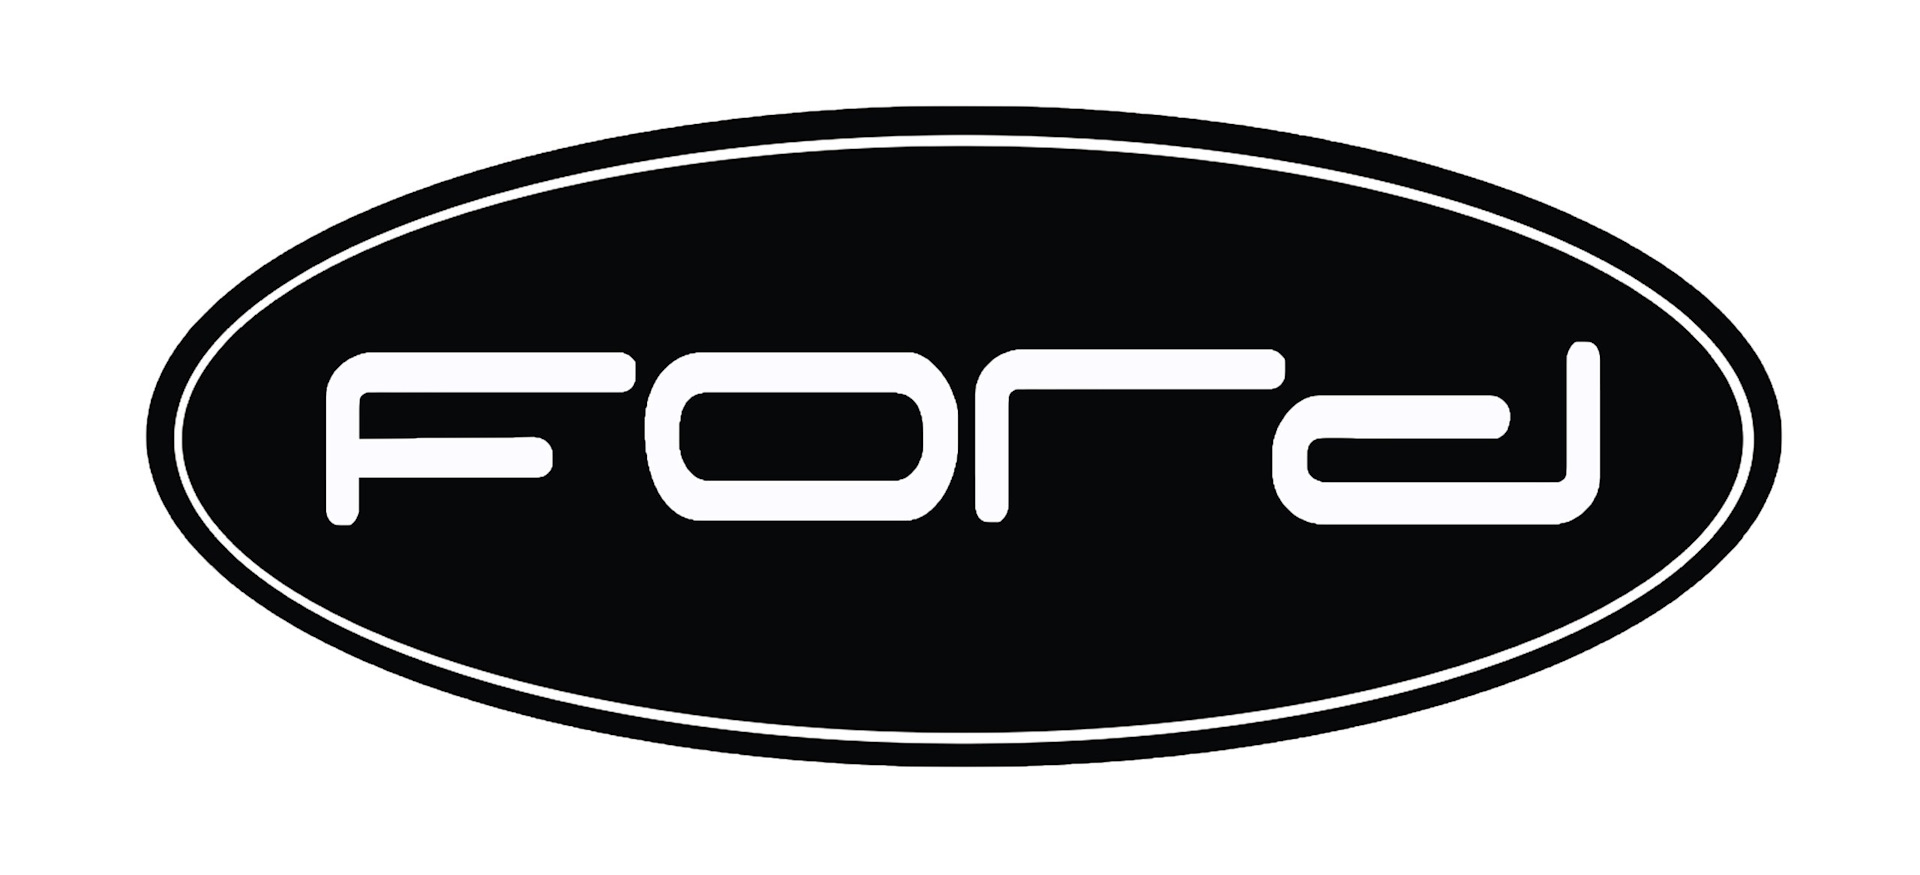 Ford logo sticker